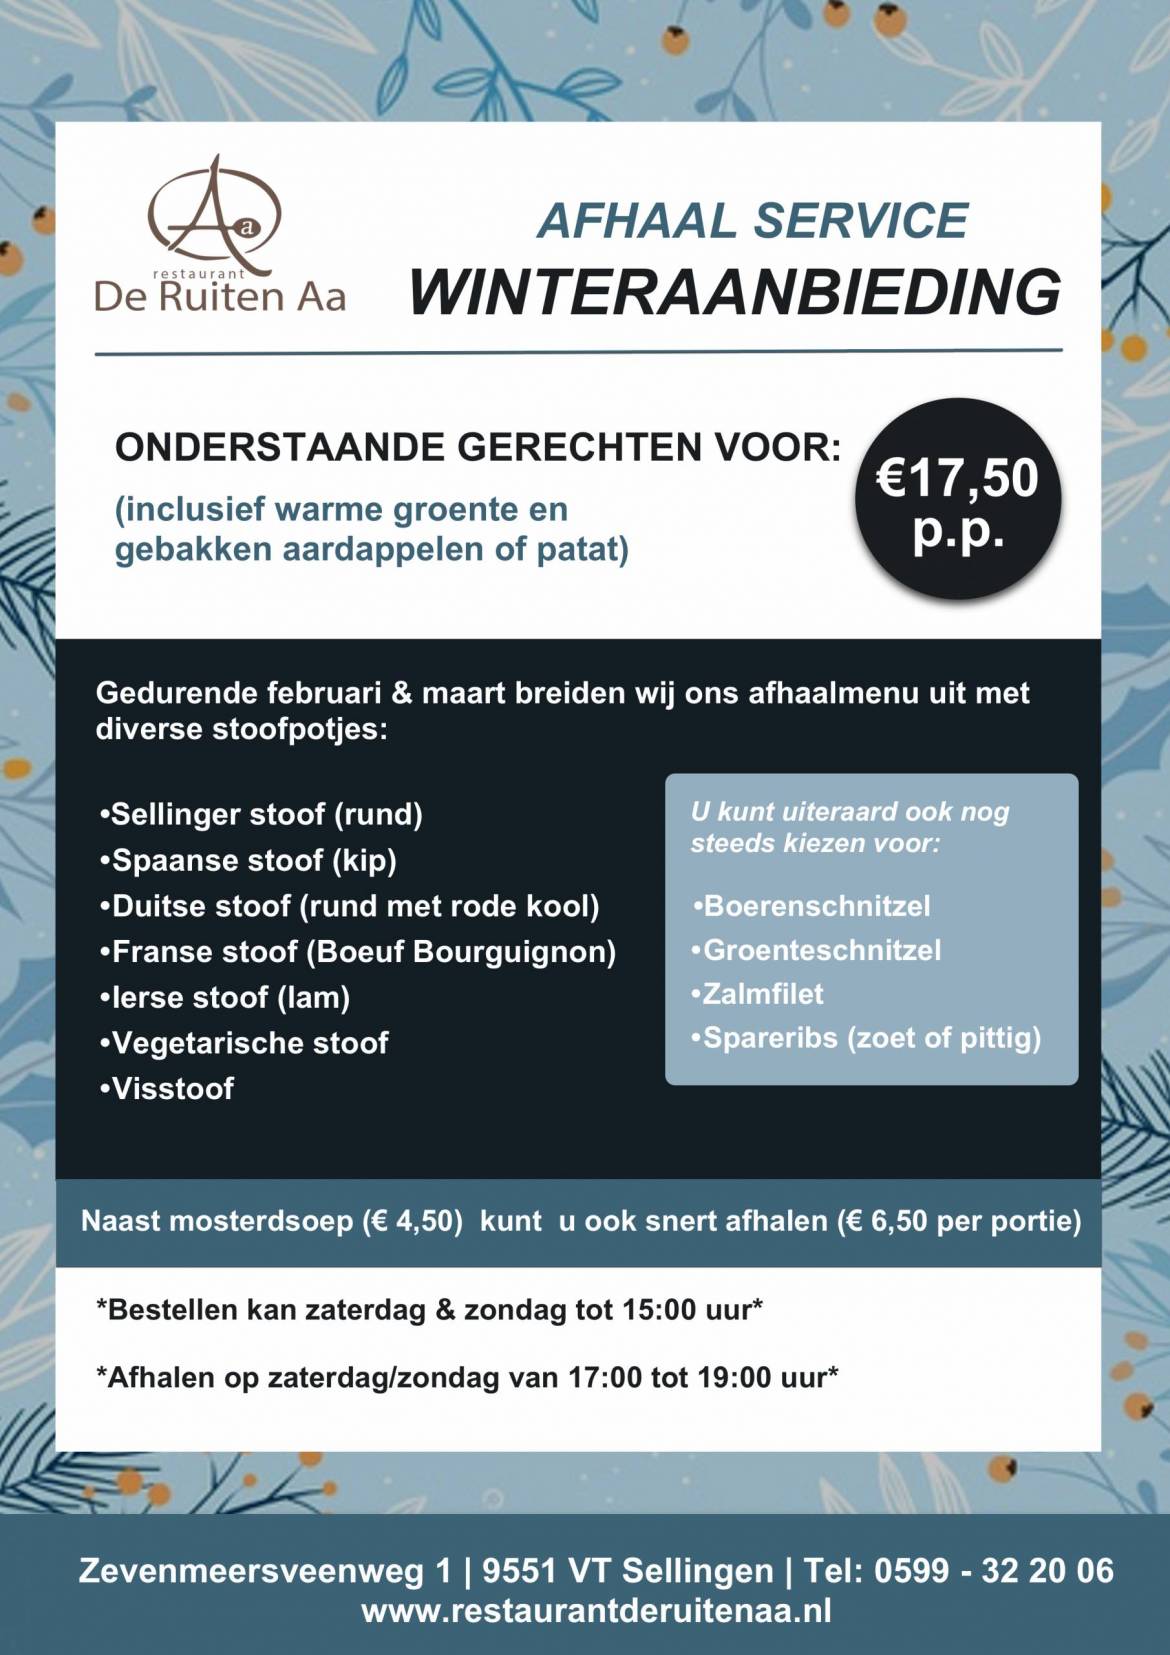 ruiten-aa-poster-winteraanbieding-scaled.jpg